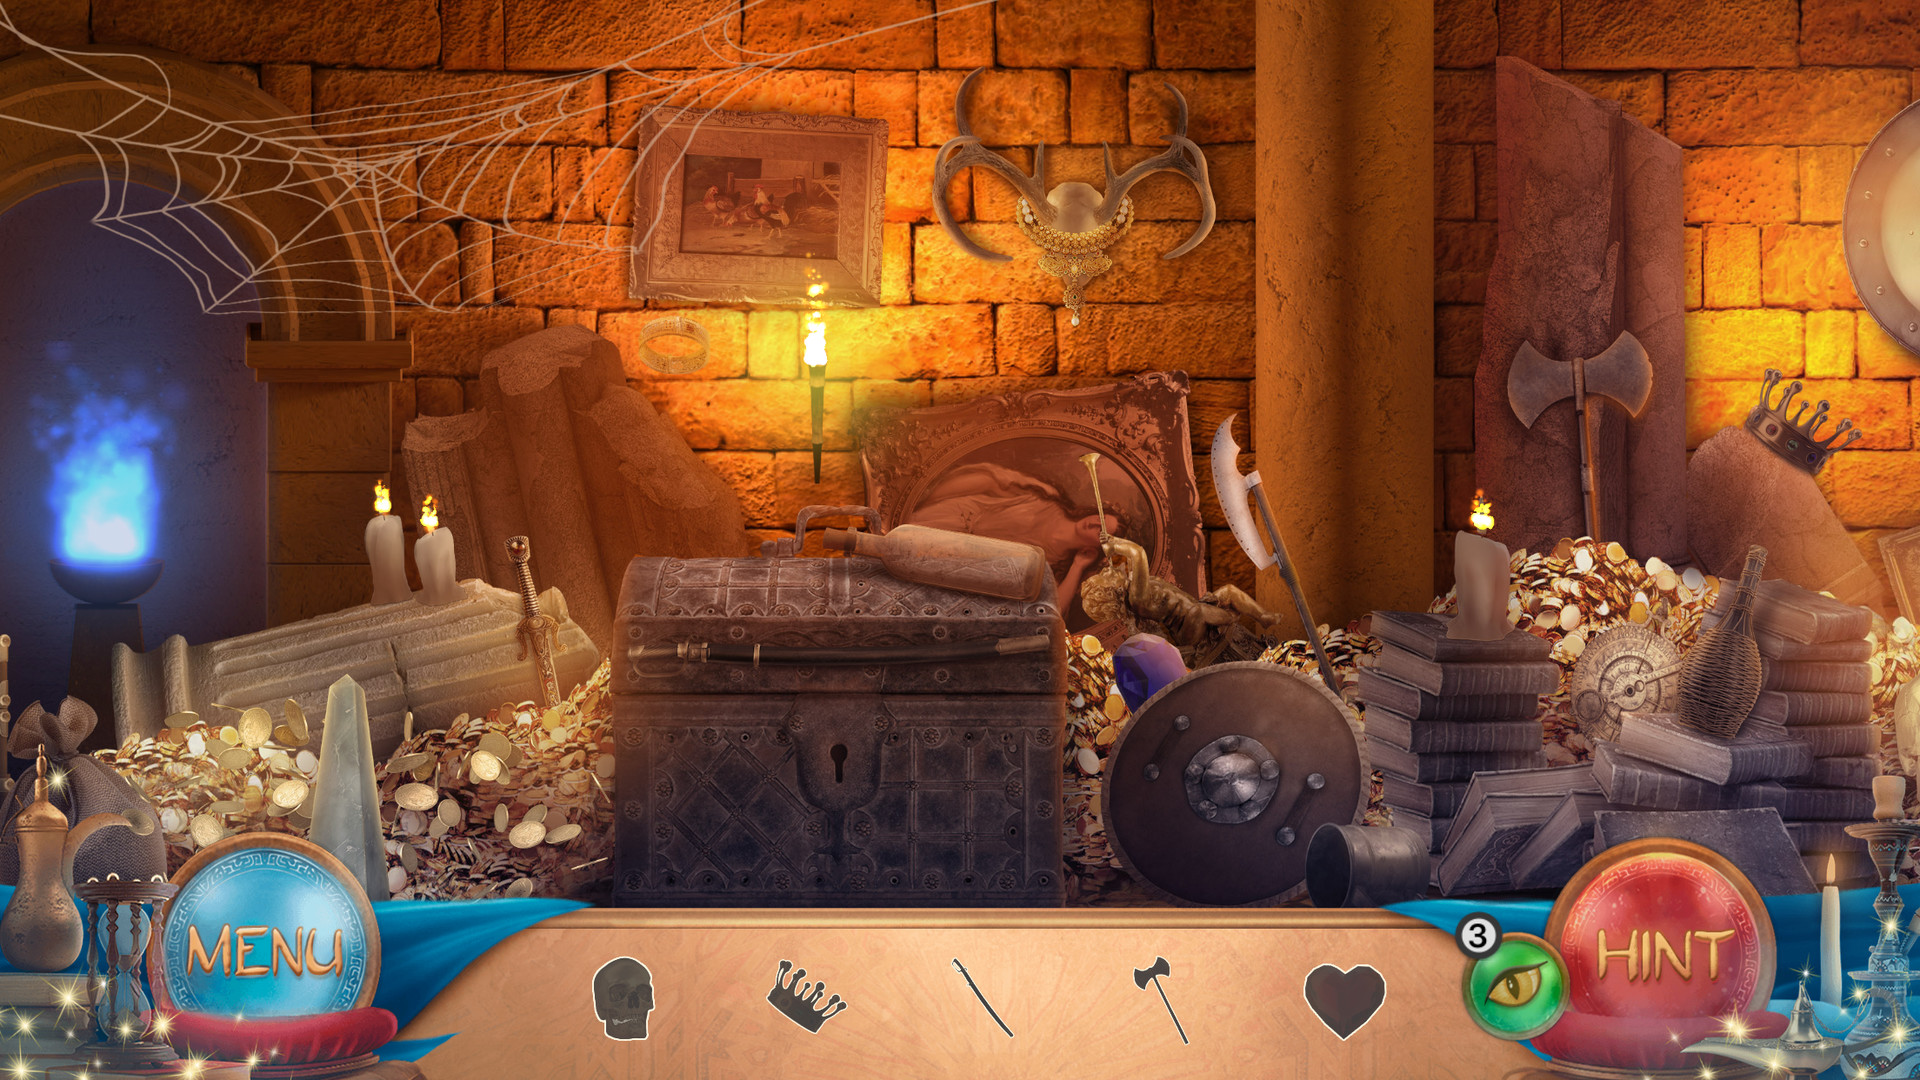 Aladdin - Hidden Objects Game on Steam